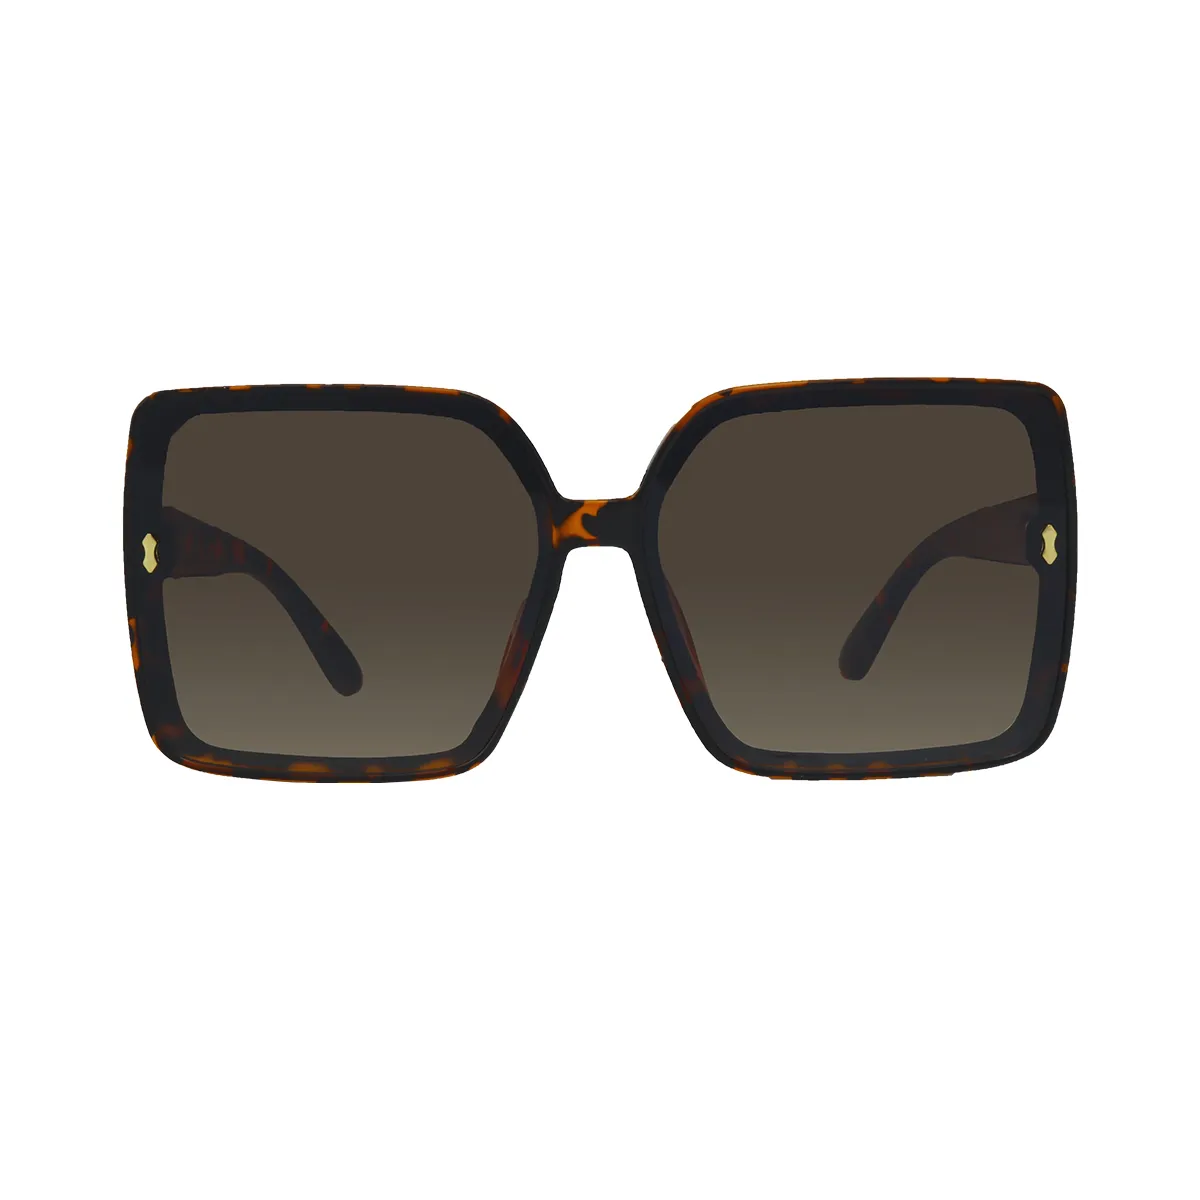 Marias - Square Tortoiseshell Sunglasses for Women